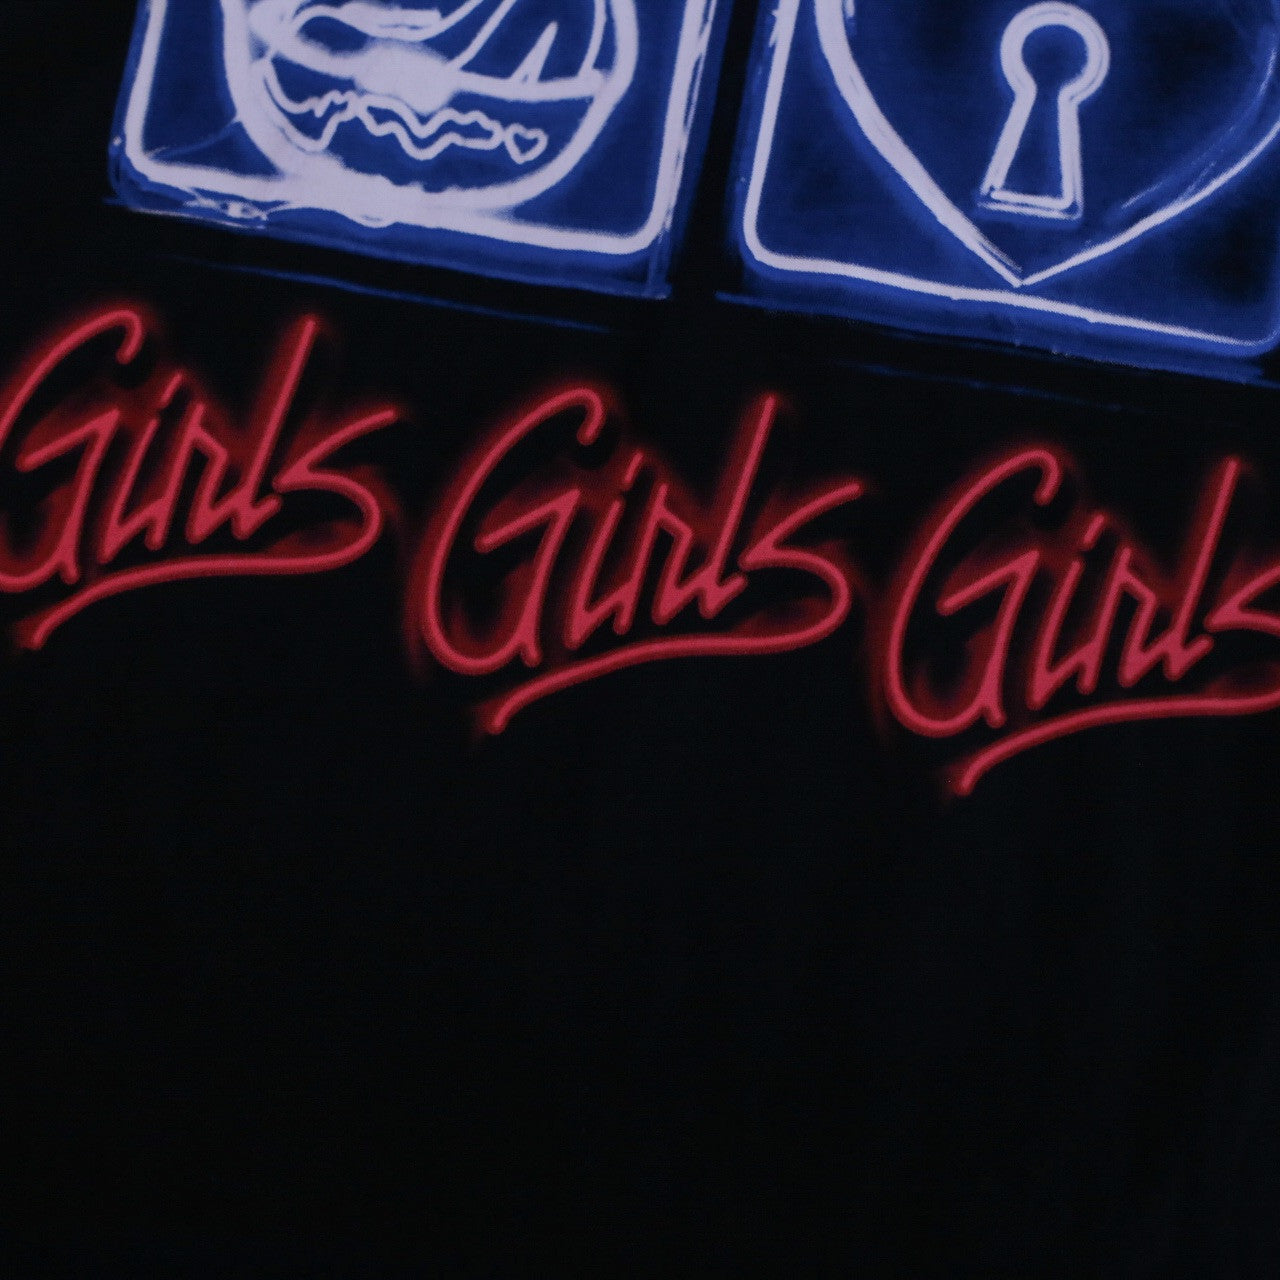 Girls Girls Girls Long Line T Shirt Black